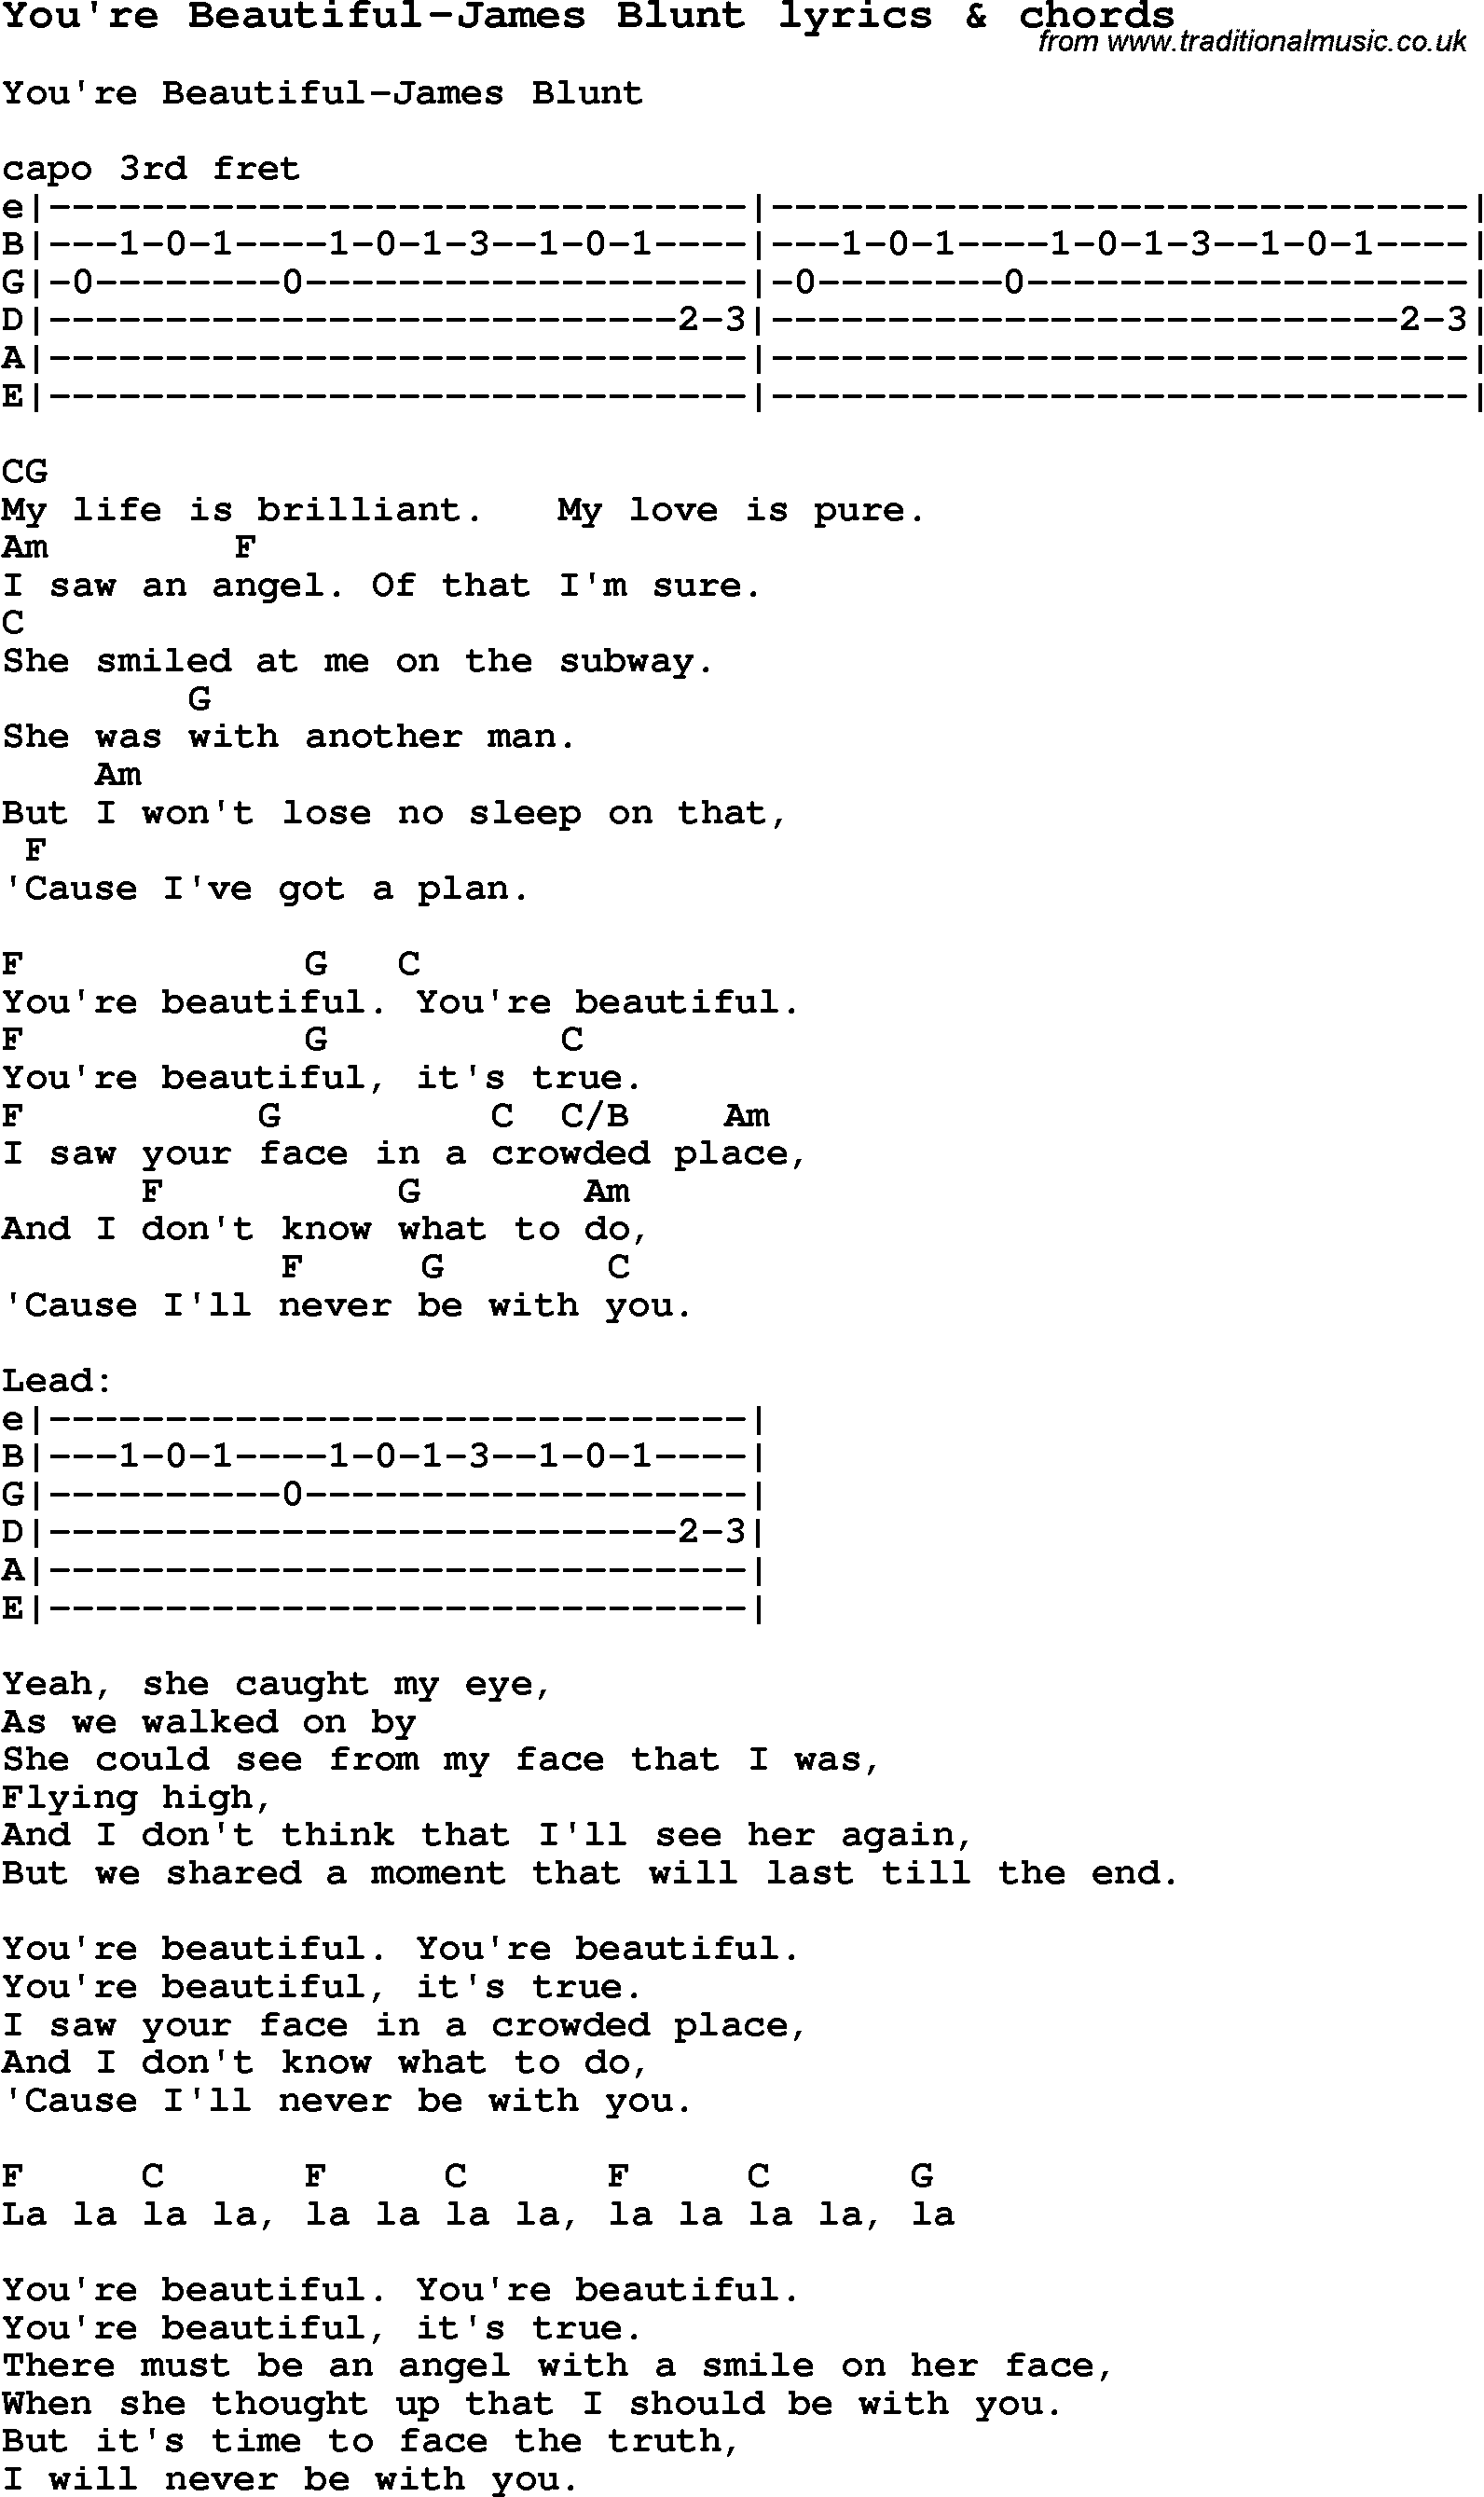 Love Song Lyrics for: You're Beautiful-James Blunt with chords for Ukulele, Guitar Banjo etc.